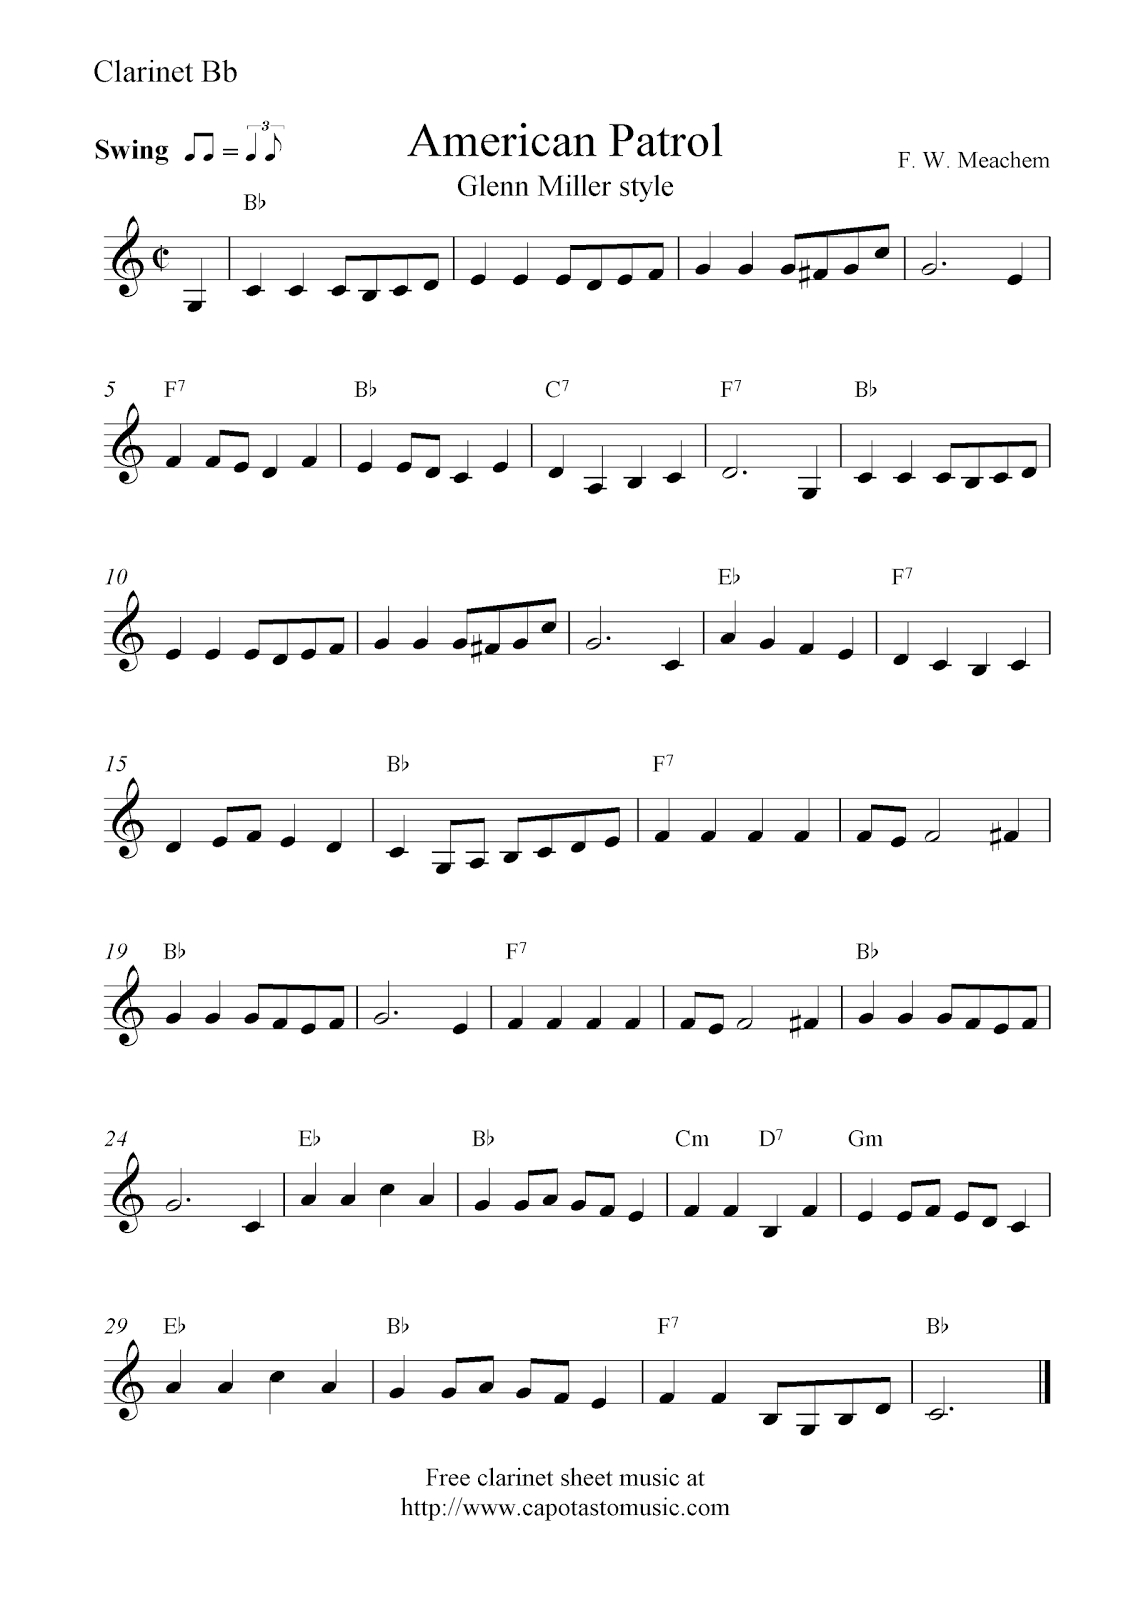 American Patrol, Free Clarinet Sheet Music Notes - Free Printable Clarinet Sheet Music